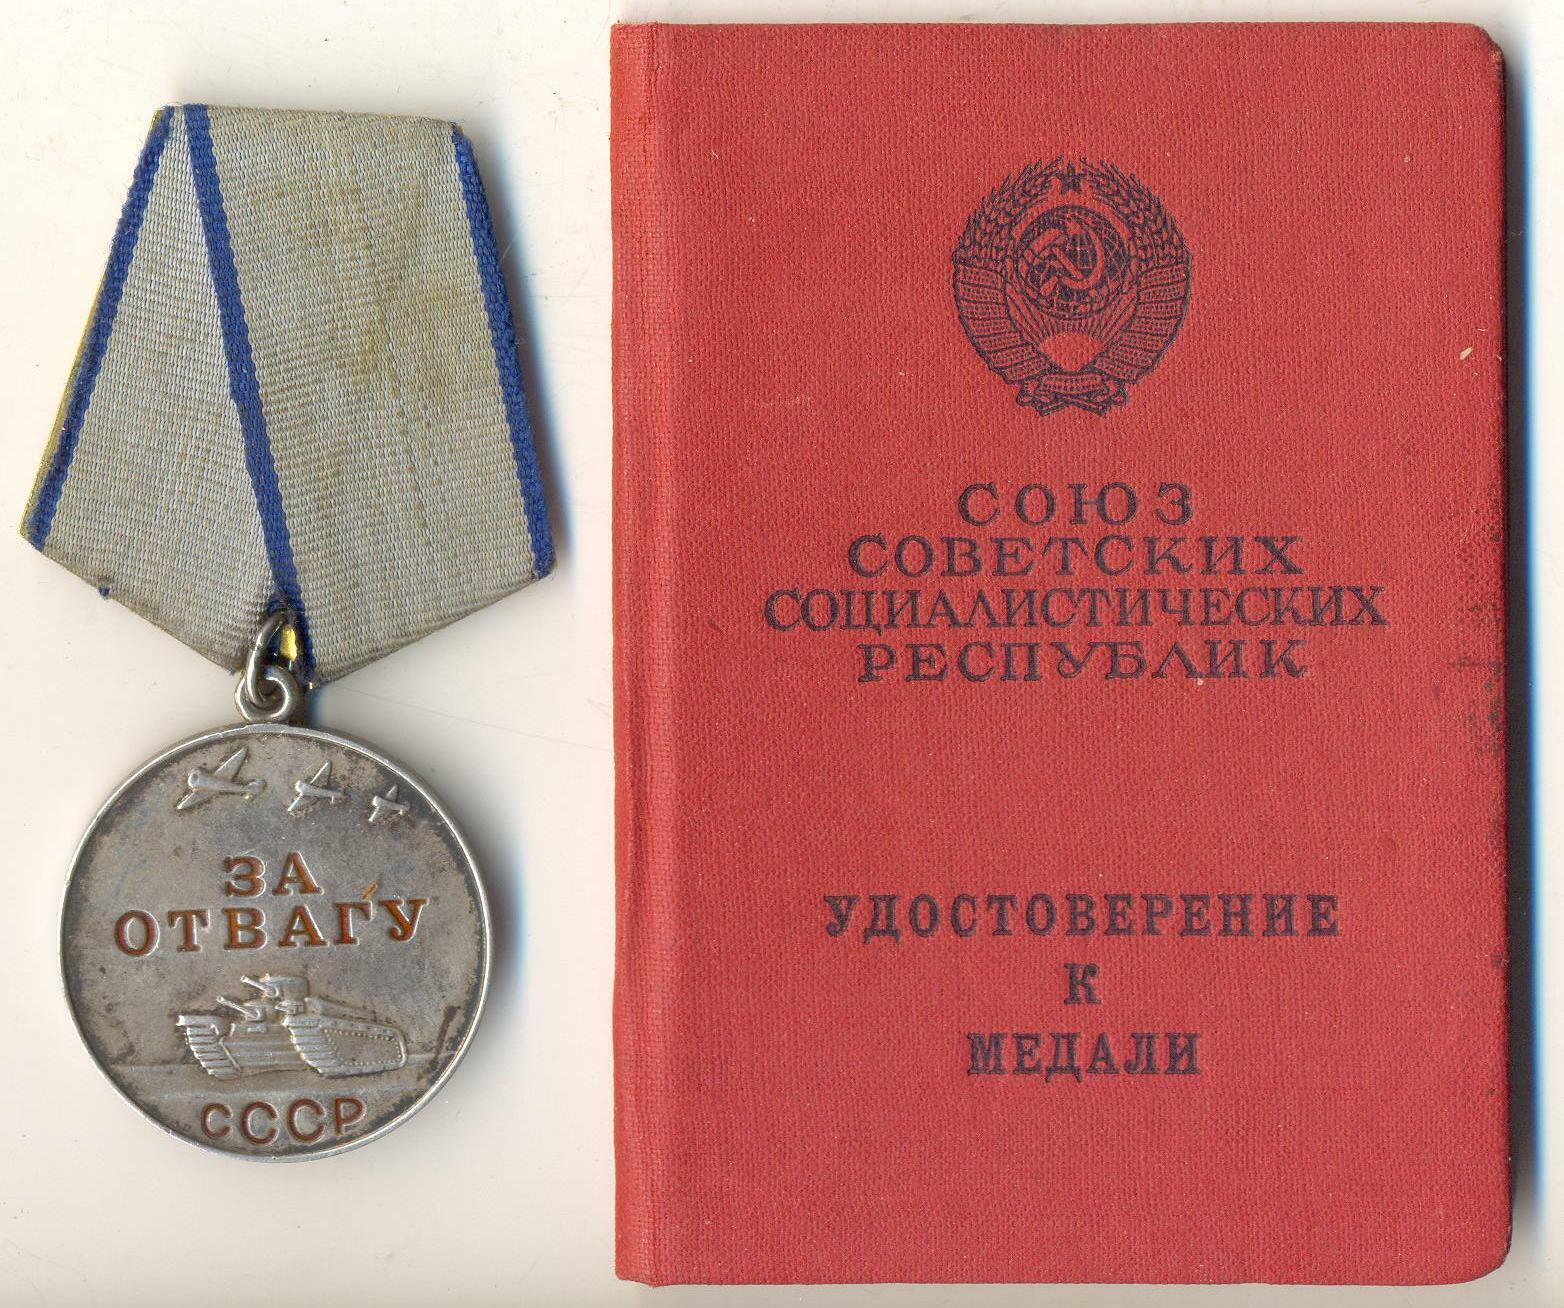  Soviet star badge red Medal Order  Banner For Courage Combat     (#2160)